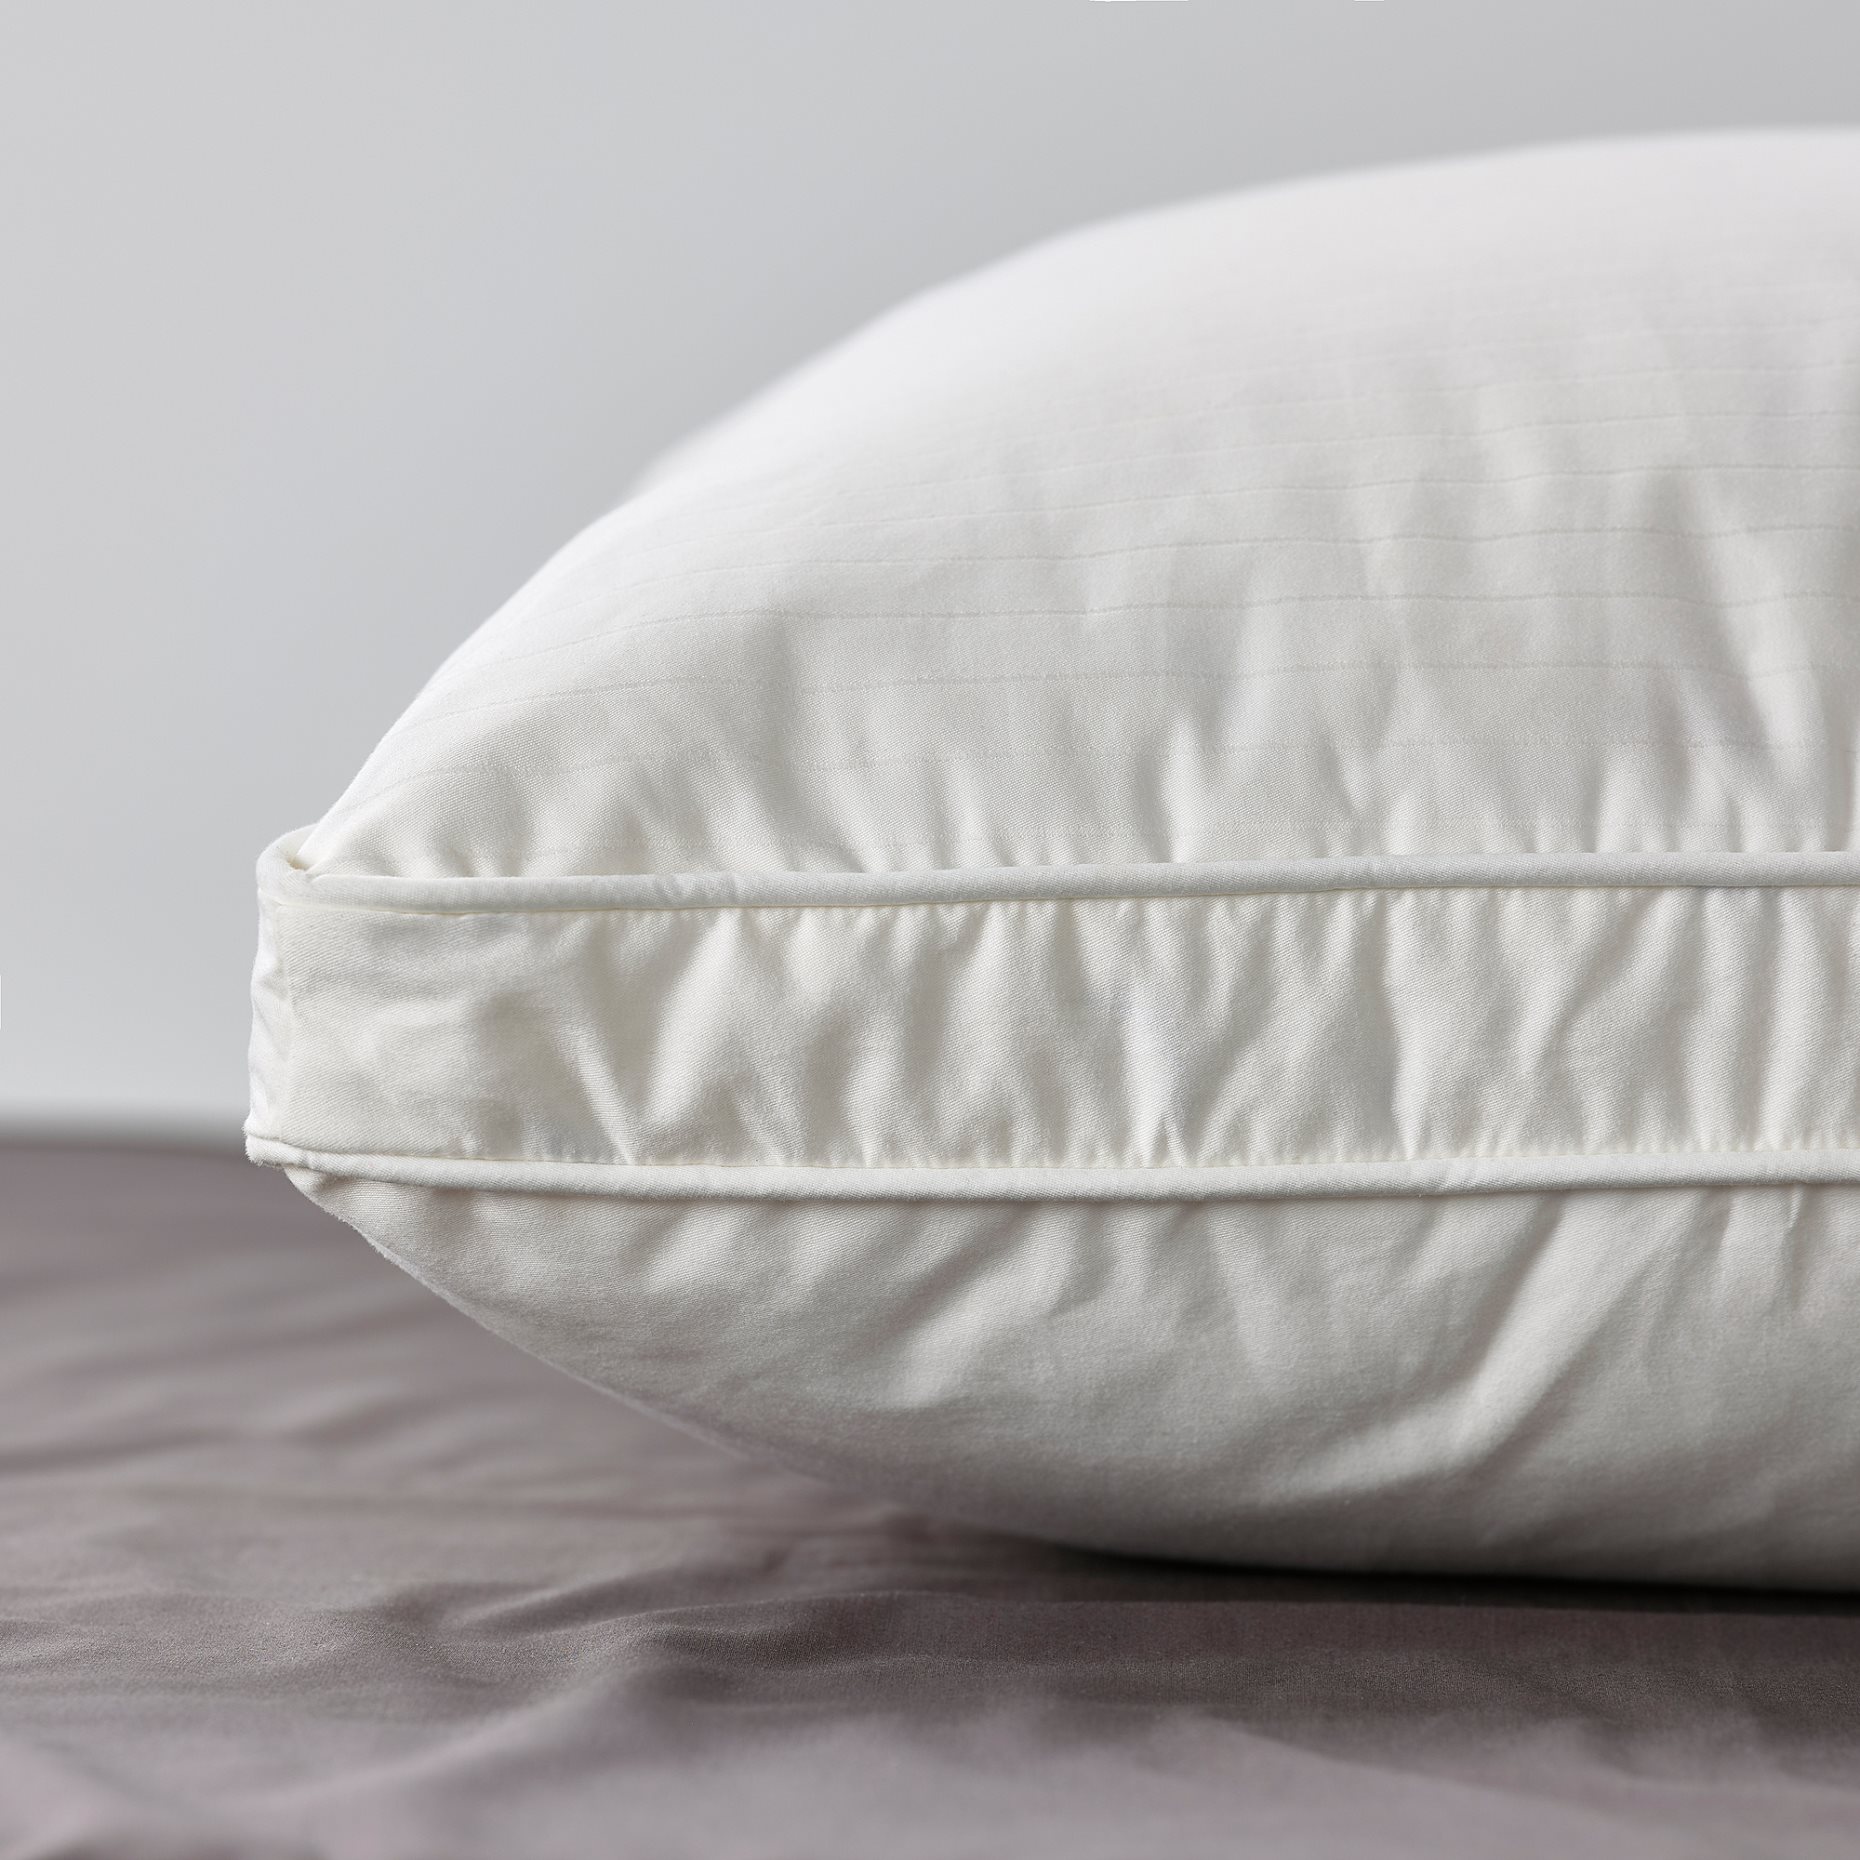 BERGVEN, μαξιλάρι ψηλό/ύπνος πλάι/ανάσκελα, 50x60 cm, 205.715.79